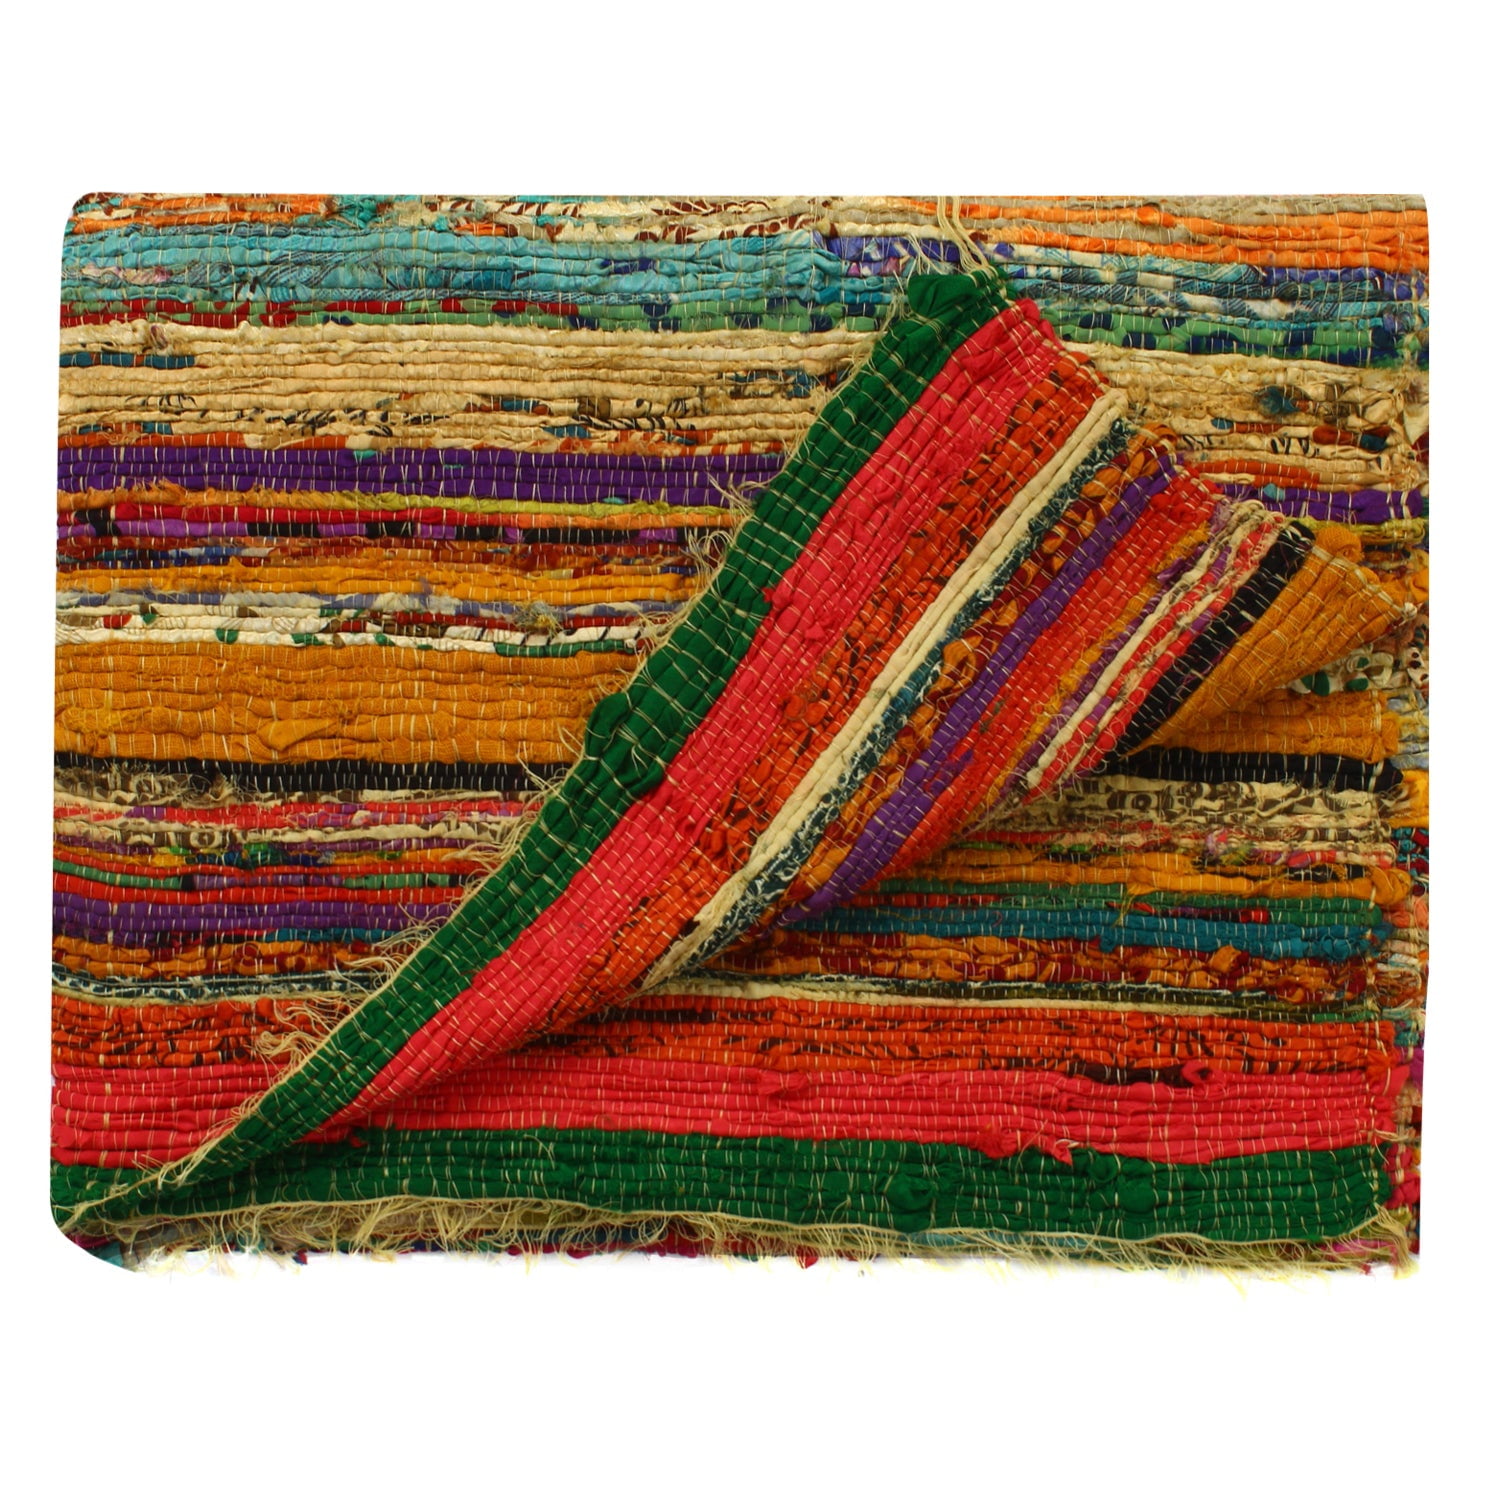 Fair Trade Loom Recycled Rag Rug Chindi Shabby Chic Woven Striped Mat Handmade 